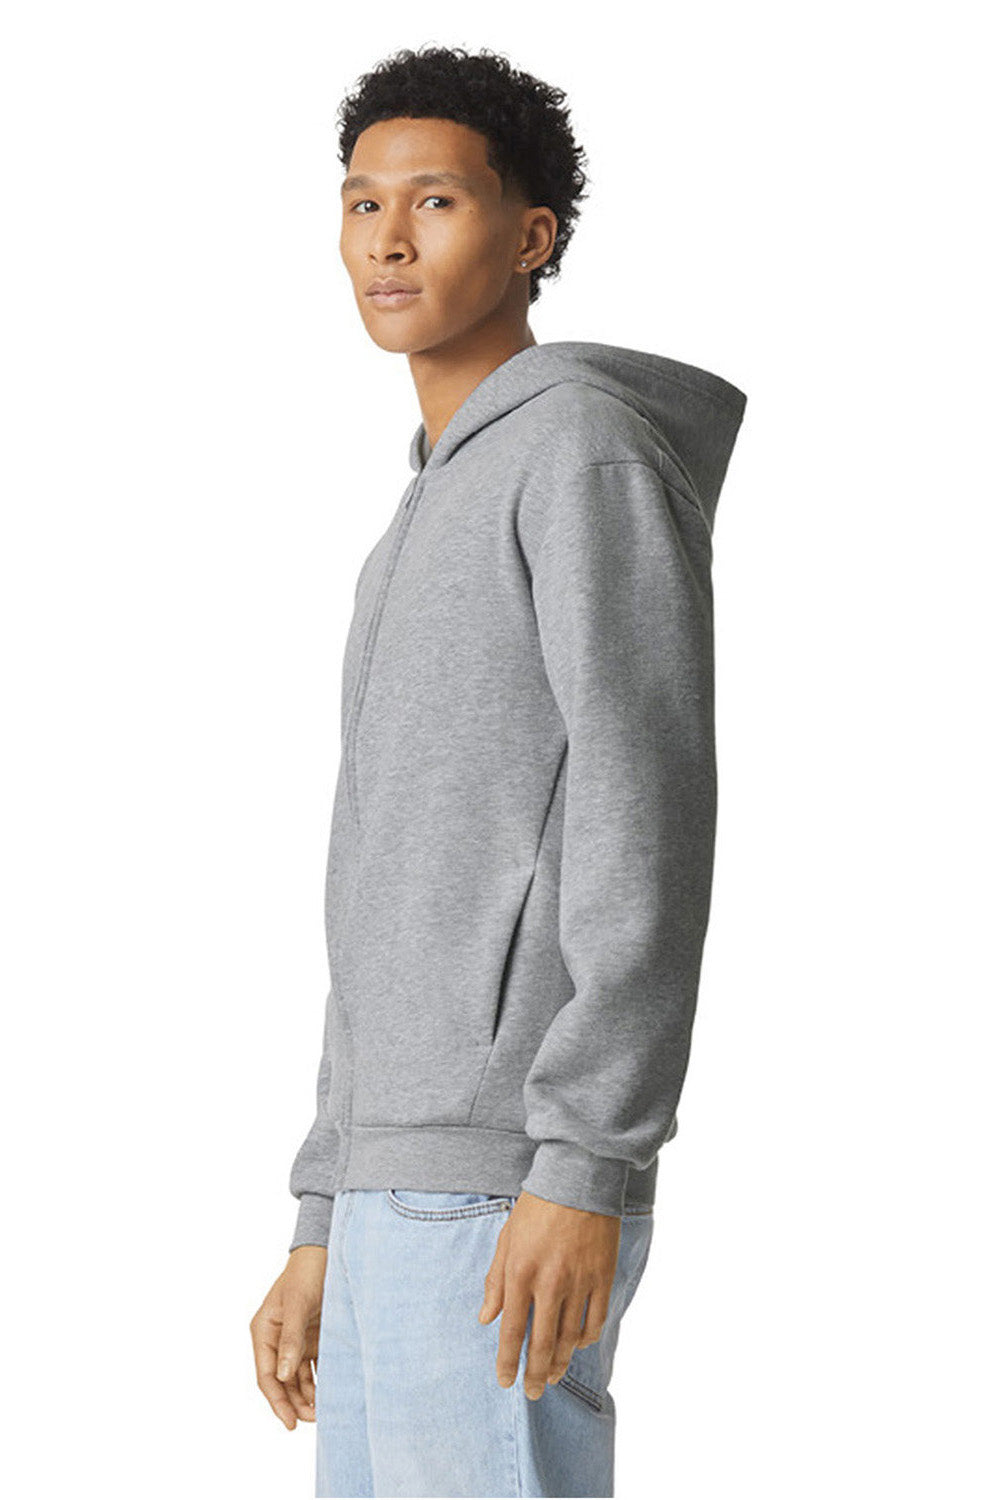 American Apparel RF497 Mens ReFlex Fleece Full Zip Hooded Sweatshirt Hoodie Heather Grey Model Side